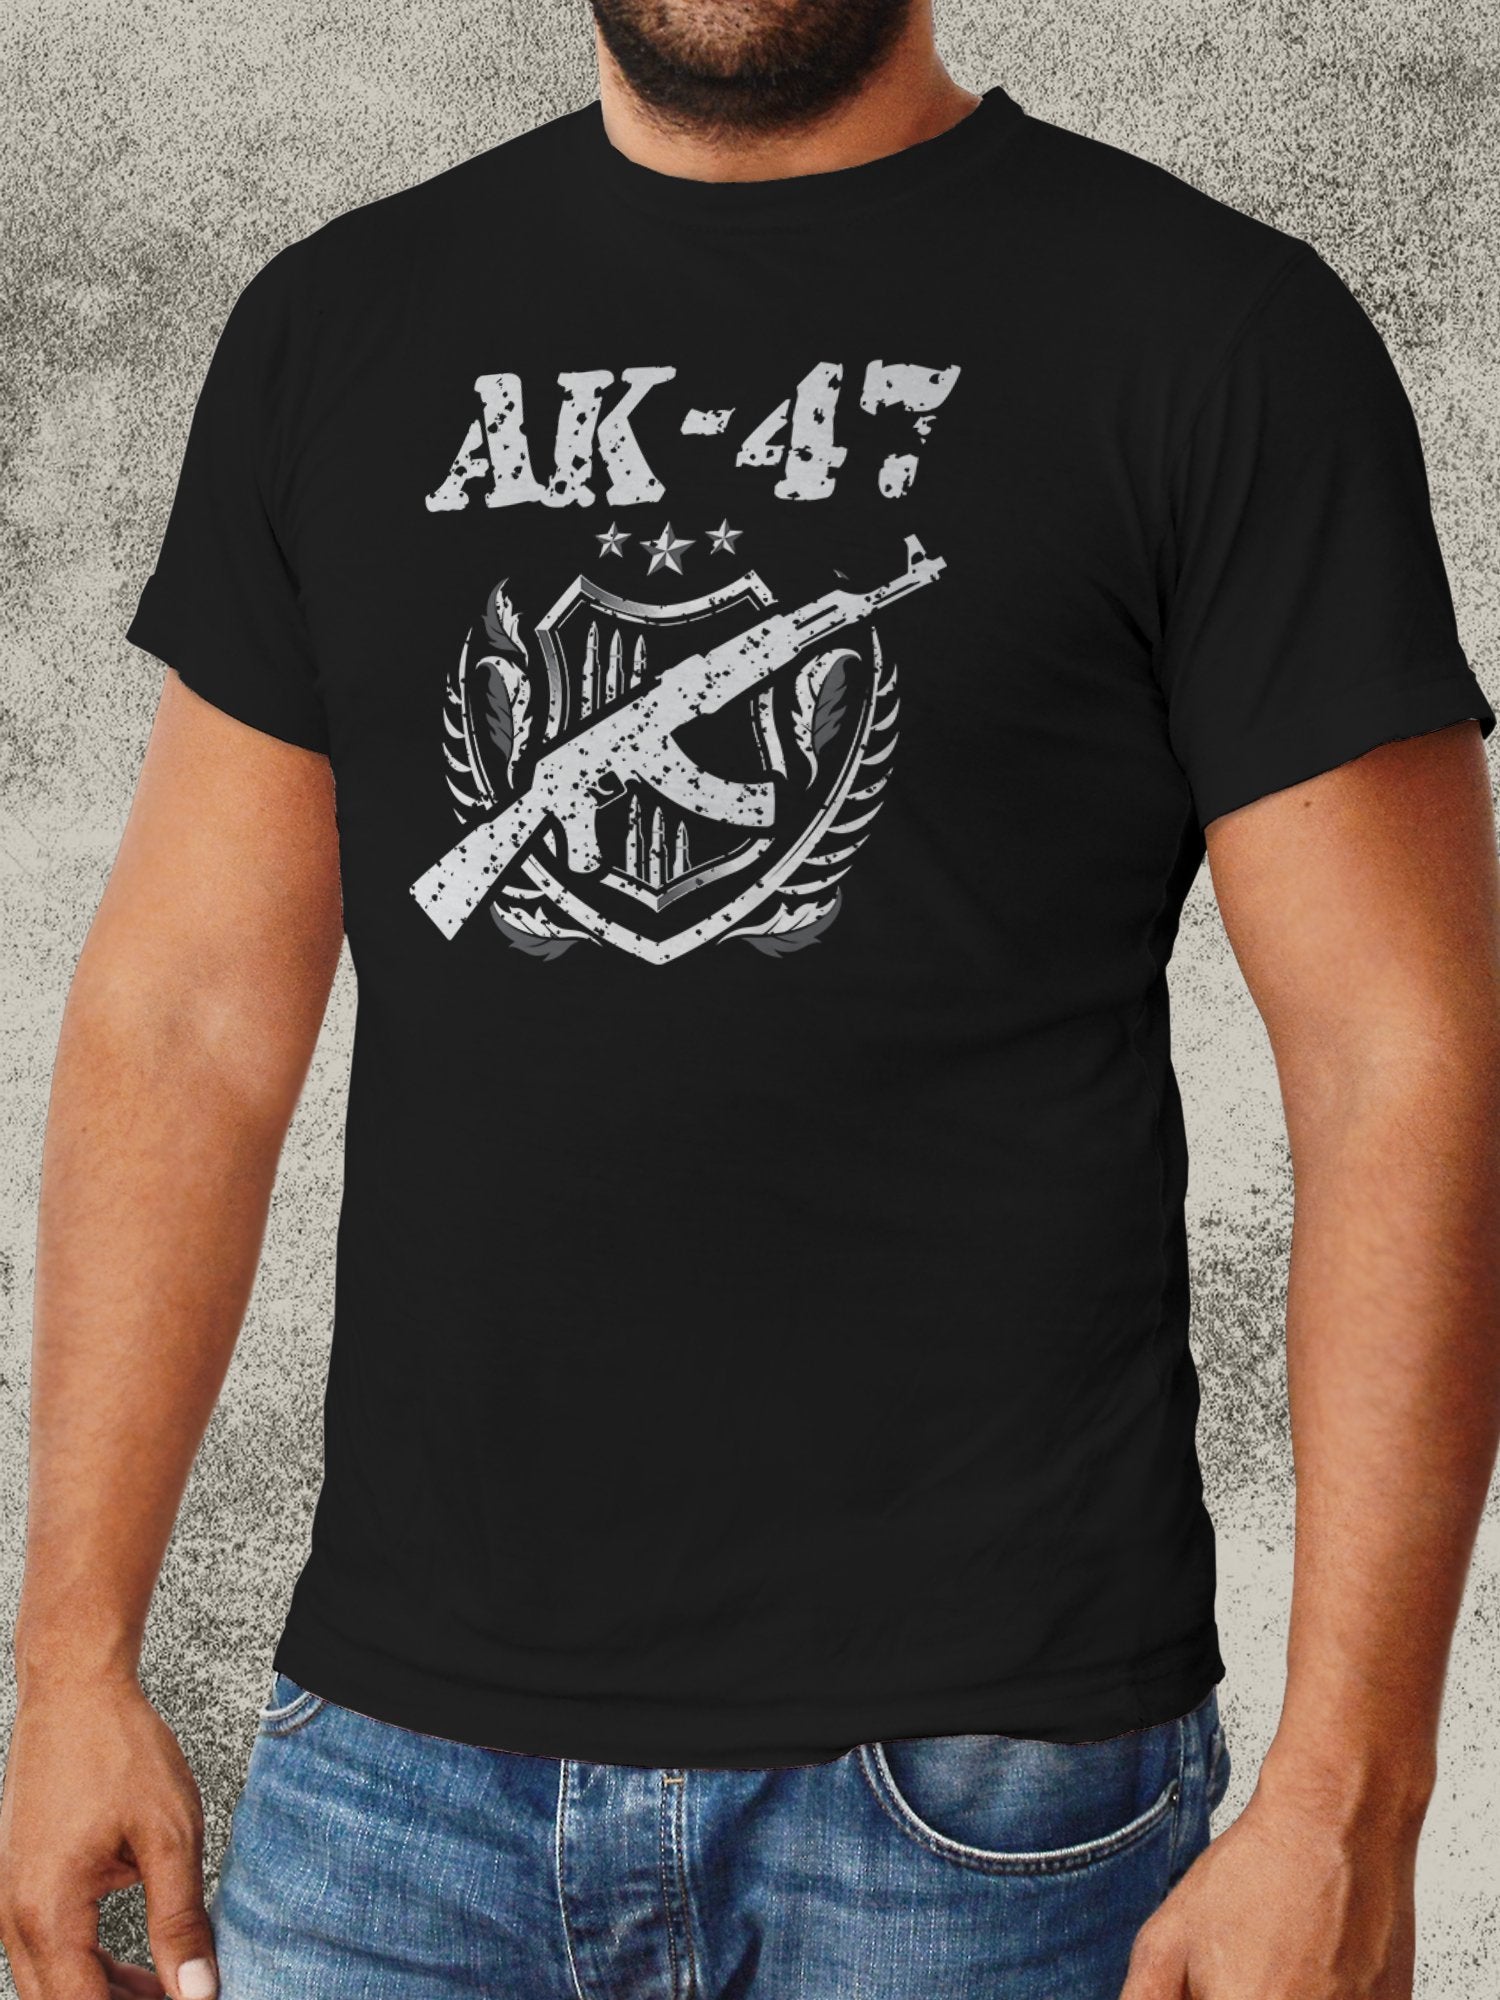 T shirt originaux Hommes Col rond Grande taille AK47 Carabine